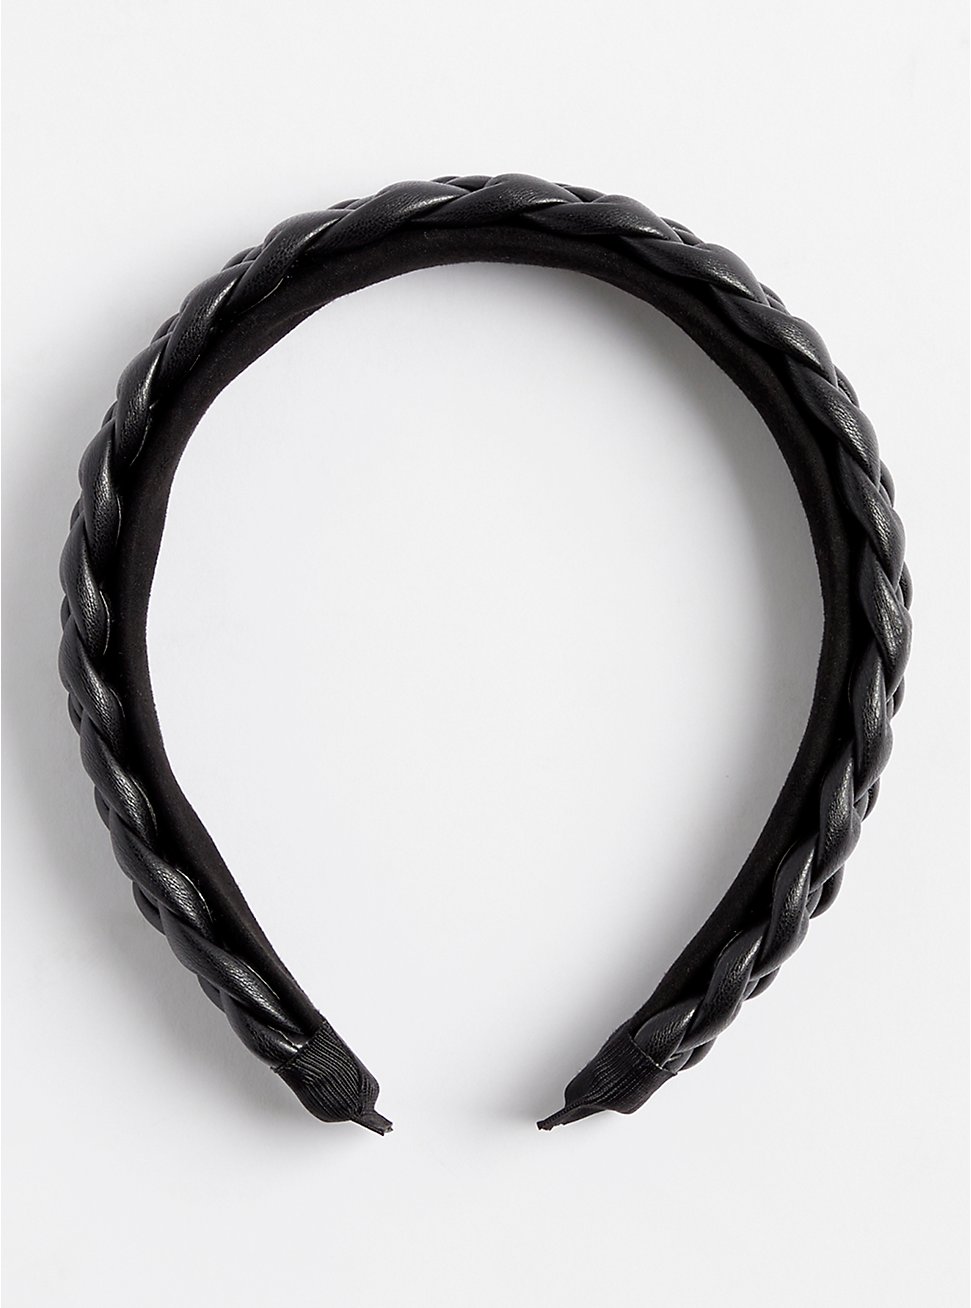 Plus Size Braided Headband - Black, , hi-res